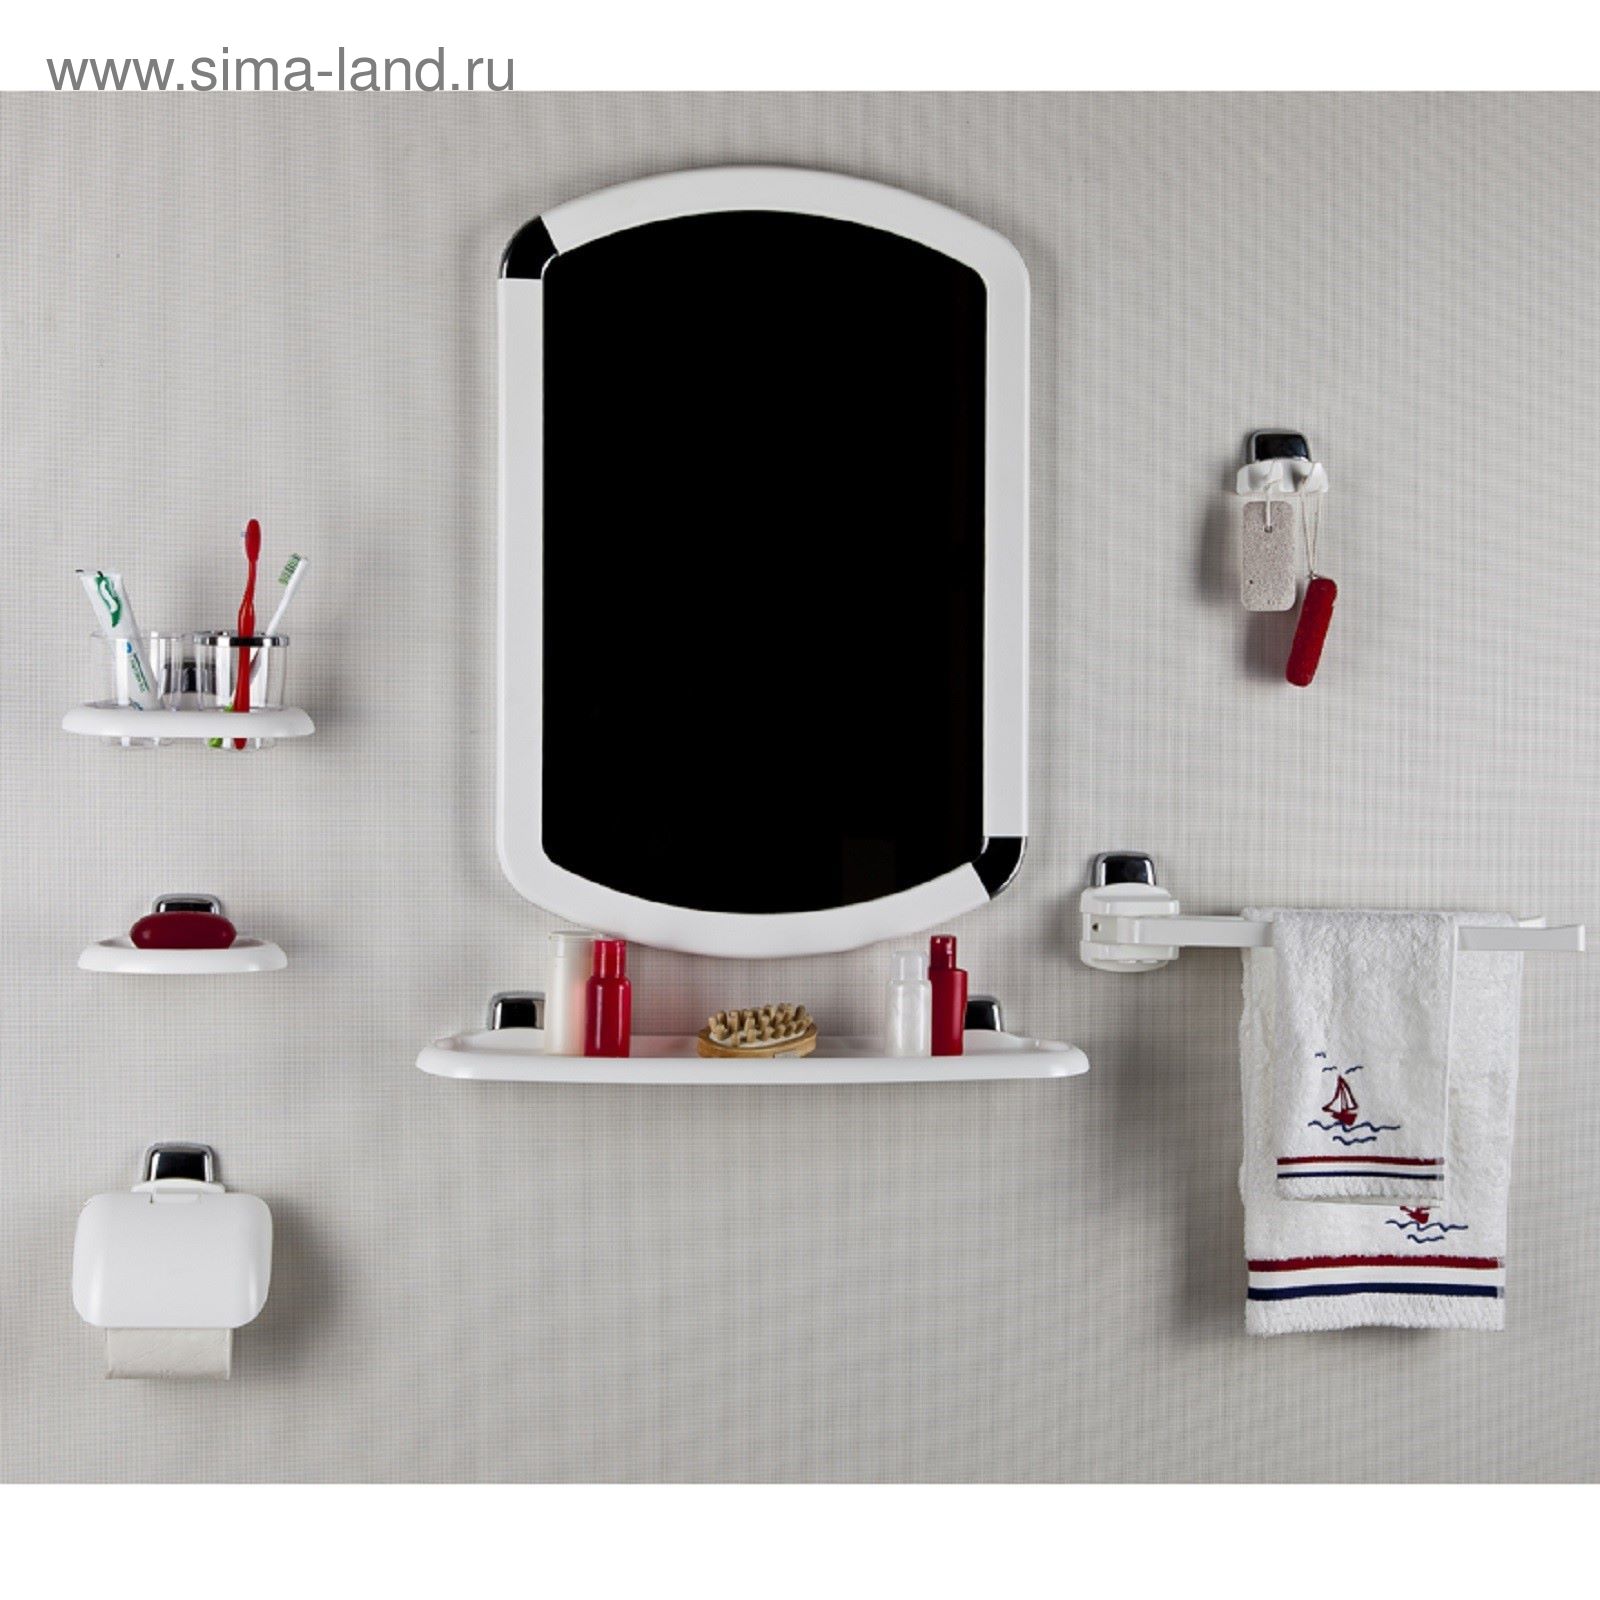 Набор для ванны зеркало. Комплект для ванной комнаты с зеркалом. Набор для ванной с зеркалом. Набор для ванной комнаты пластиковый. Зеркало для ванной пластмассовое.